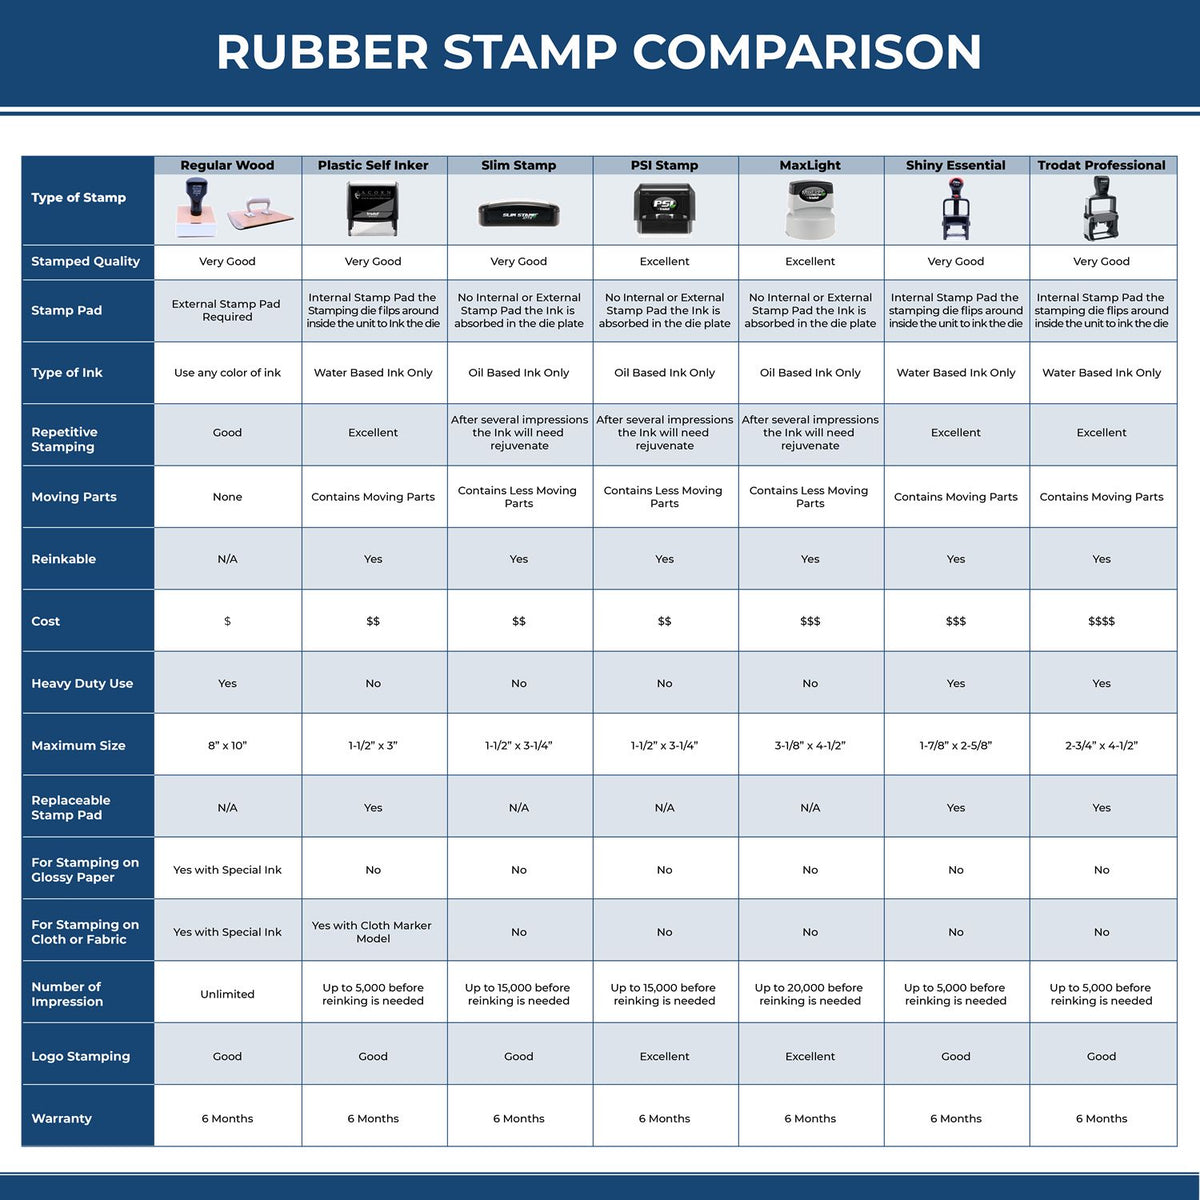 File Copy with Folder Rubber Stamp 4081R Rubber Stamp Comparison